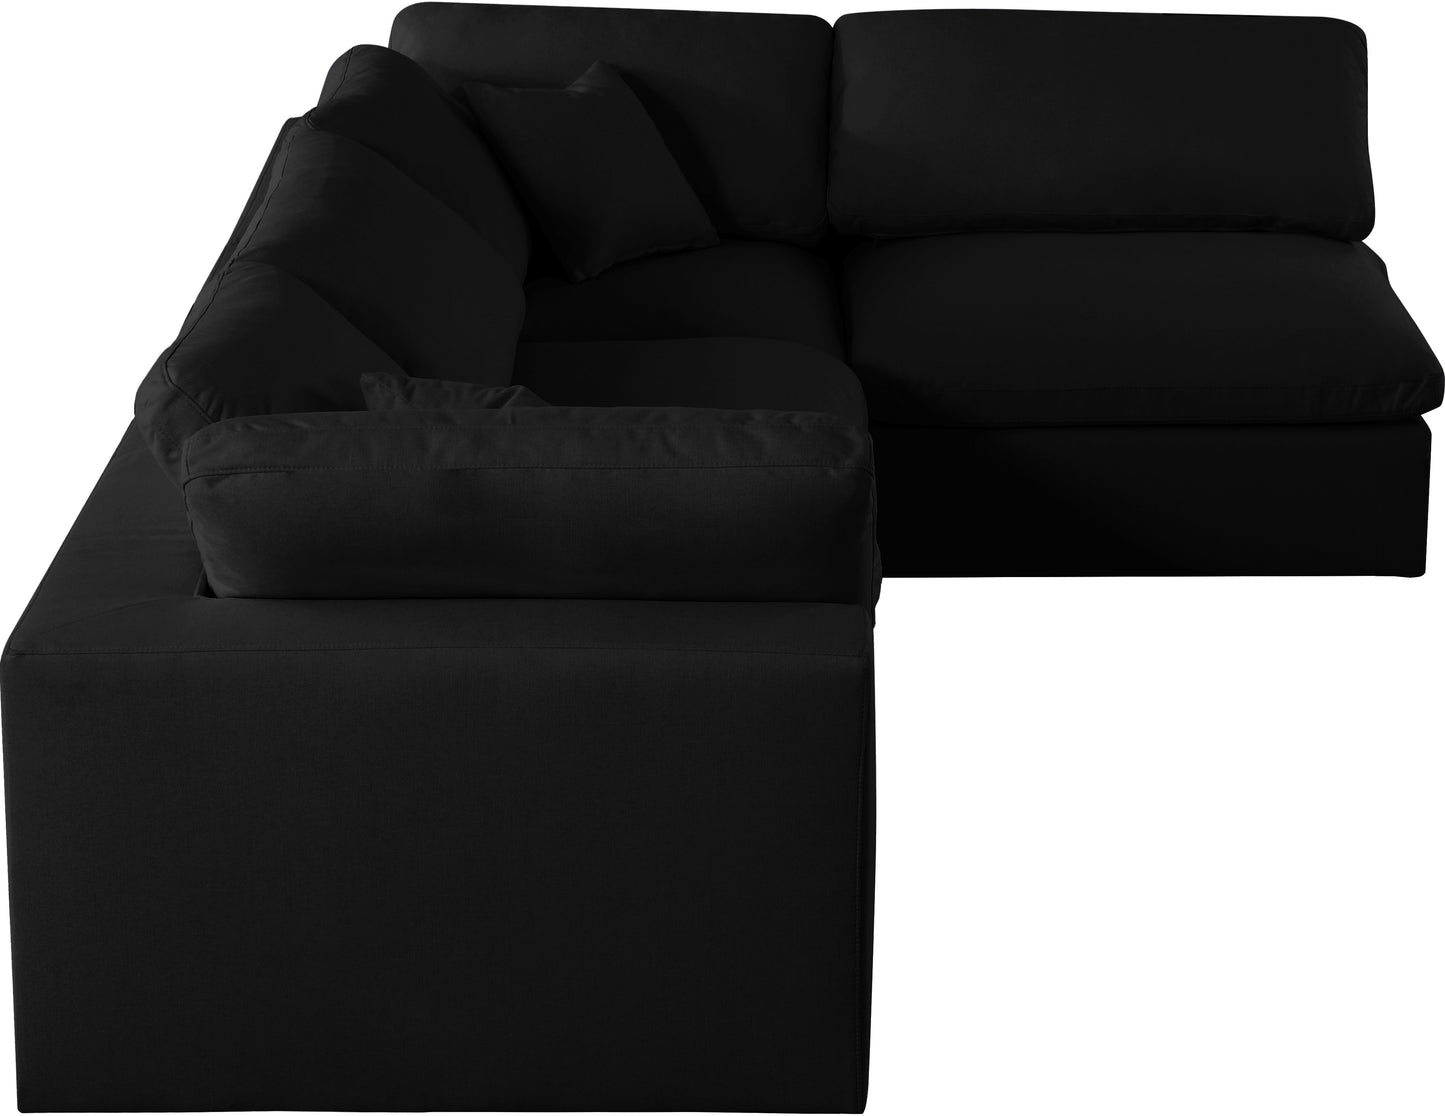 damian black linen textured fabric deluxe comfort modular sectional sec4b